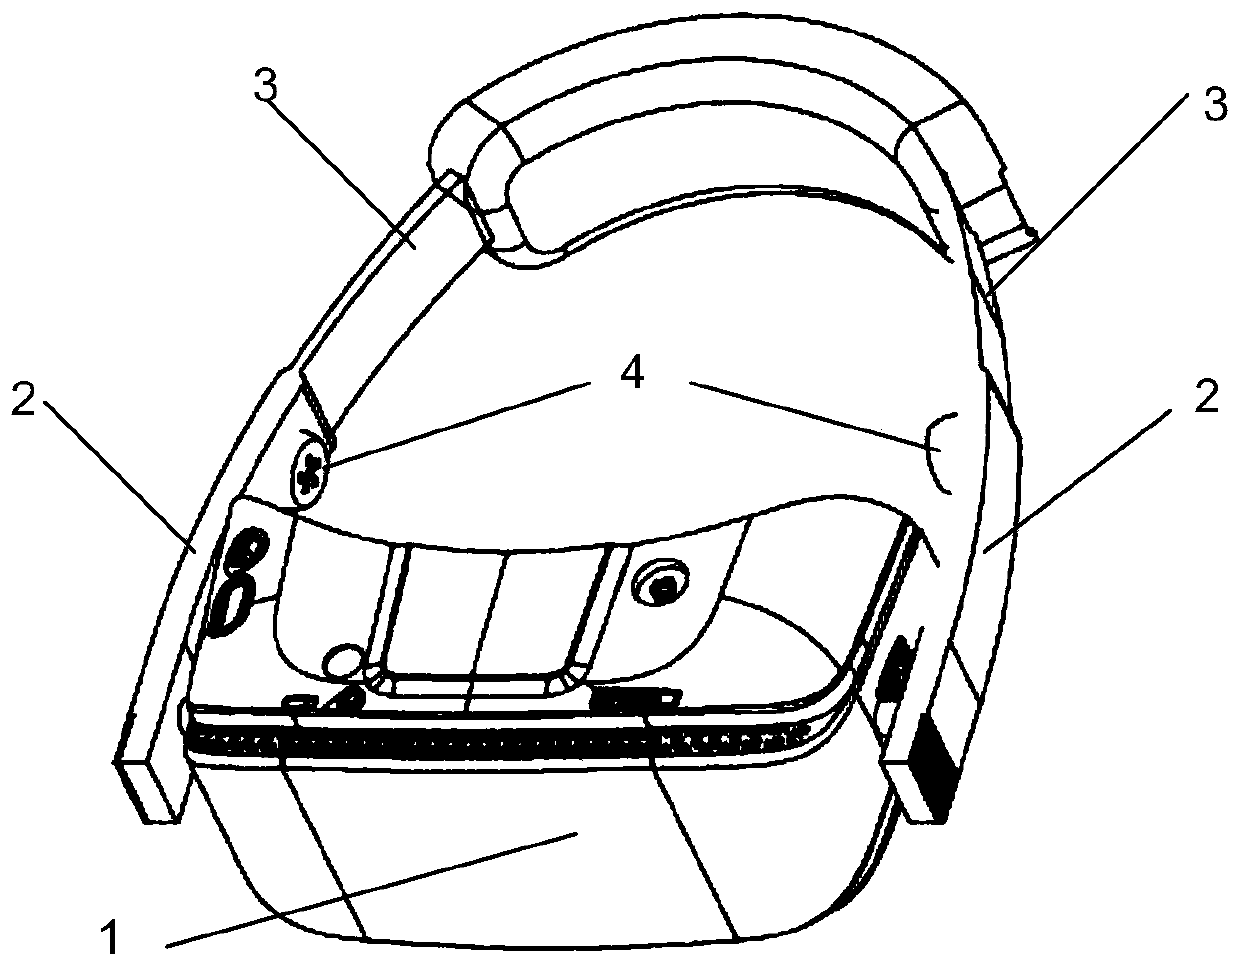 Head-mounted device